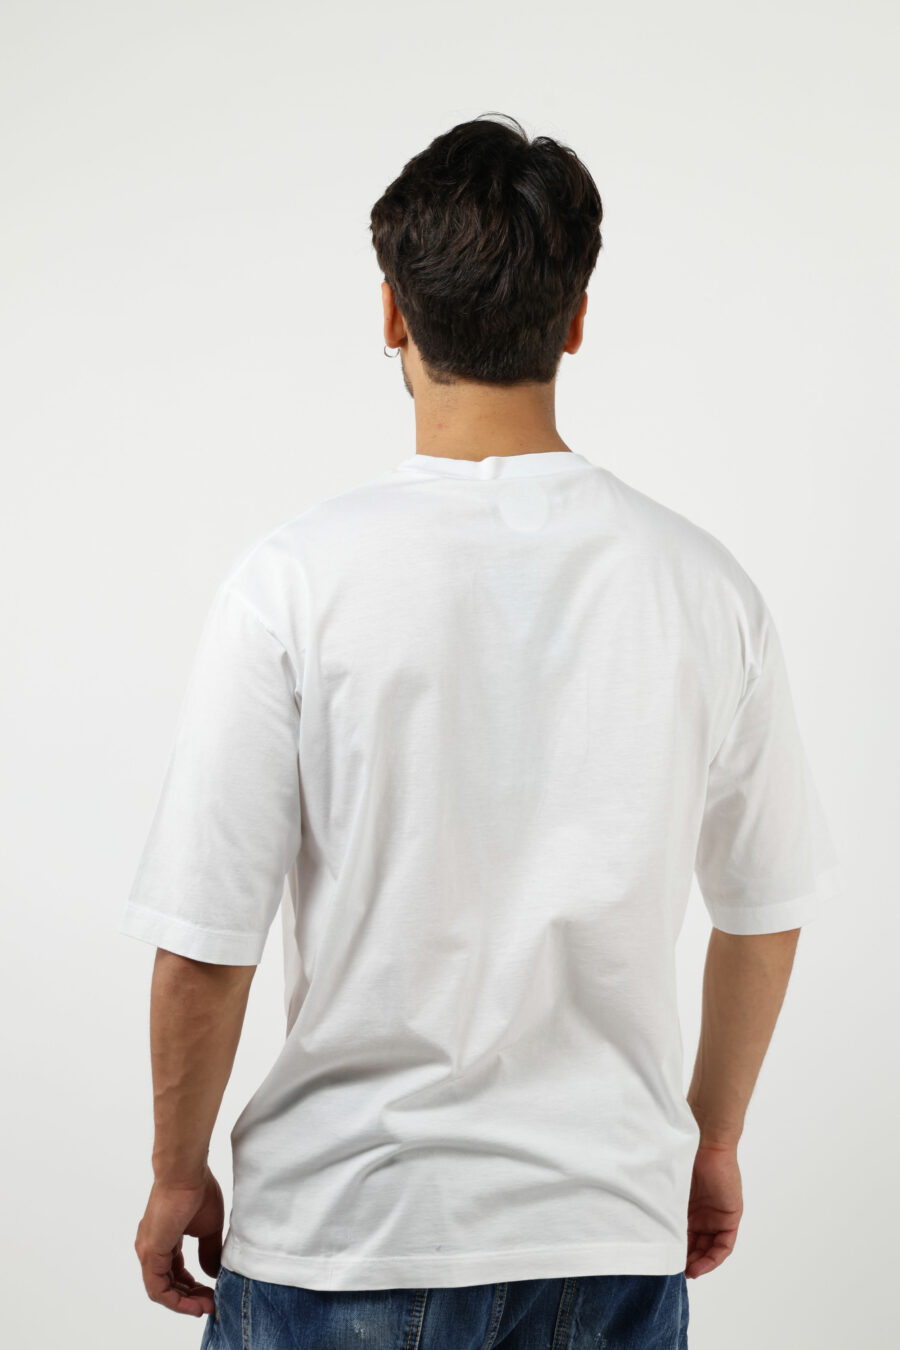 Camiseta blanca con maxilogo "canadian team 1995" - 8054148301507 2